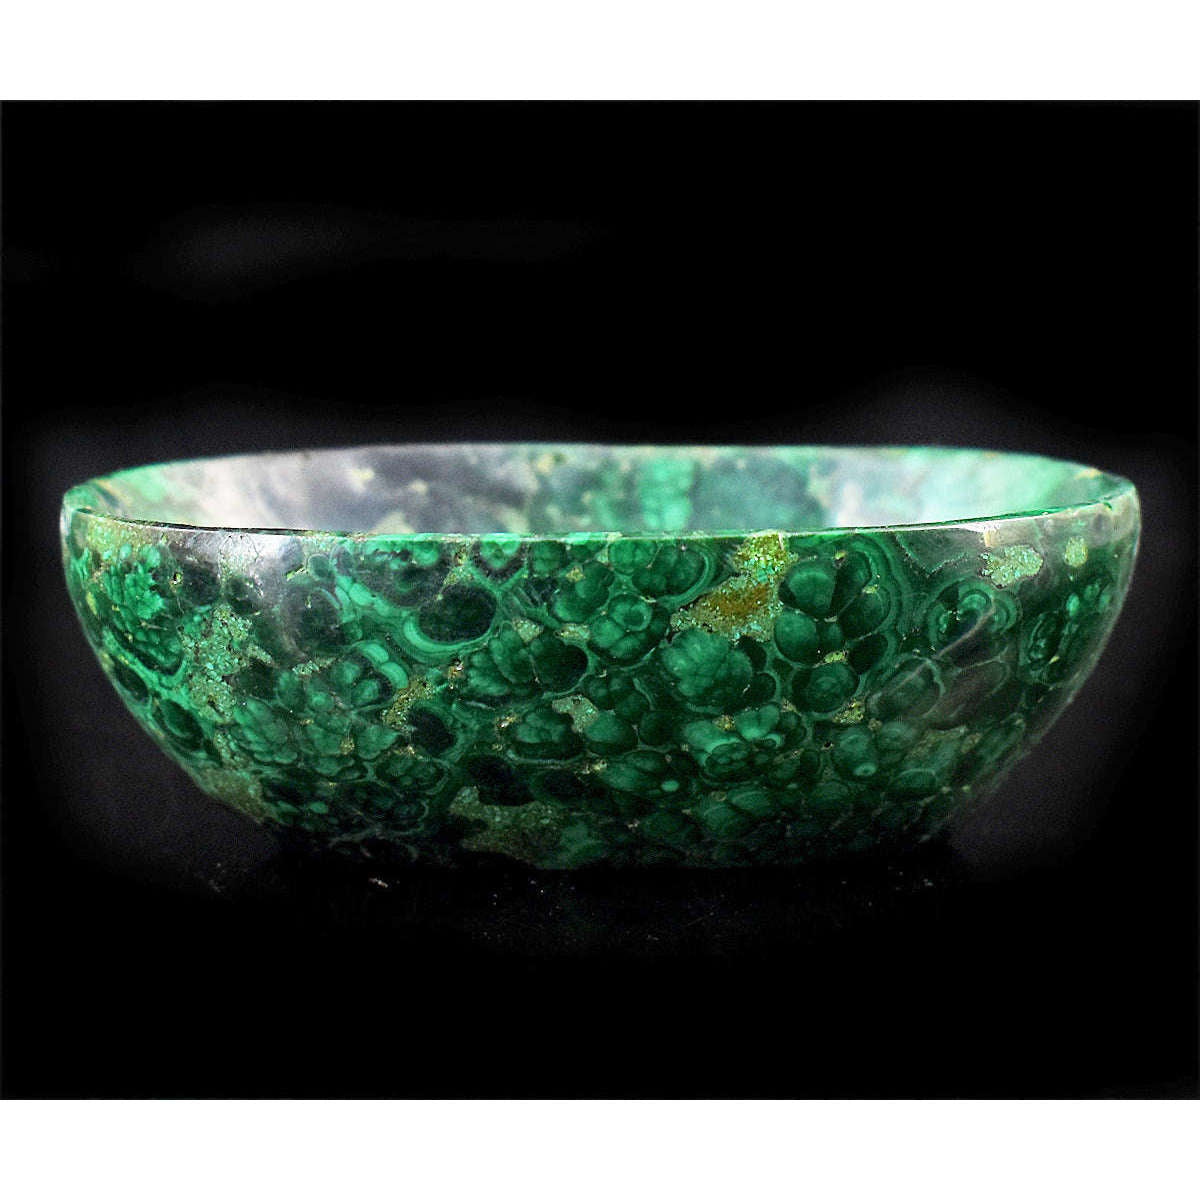 gemsmore:Stunning Malachite  Hand Carved Genuine Crystal Gemstone Carving Bowl